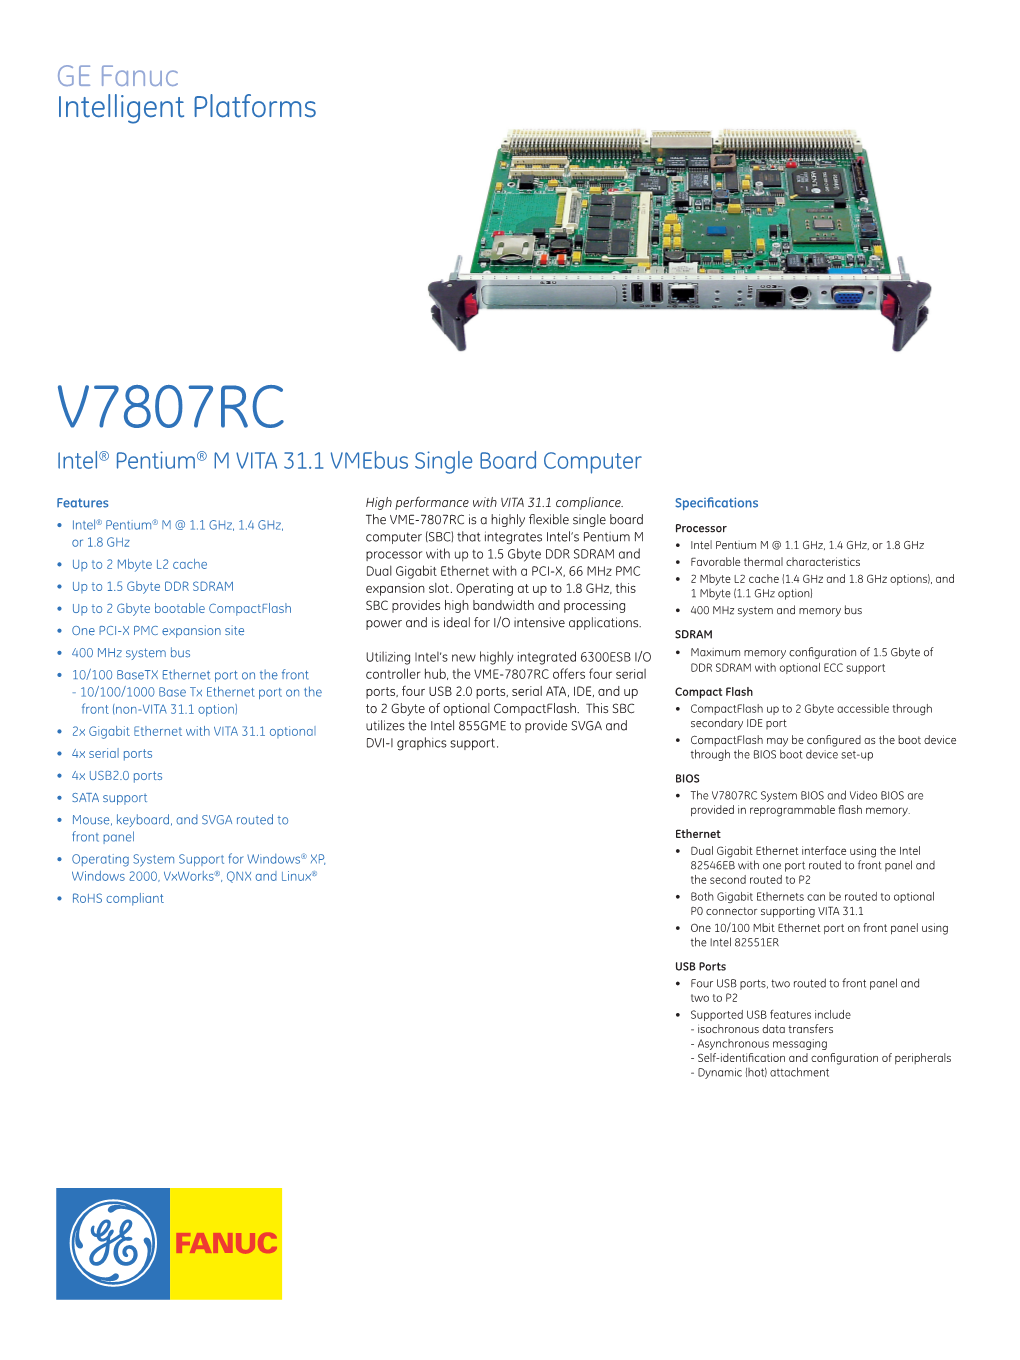 V7807RC Intel® Pentium® M VITA 31.1 Vmebus Single Board Computer